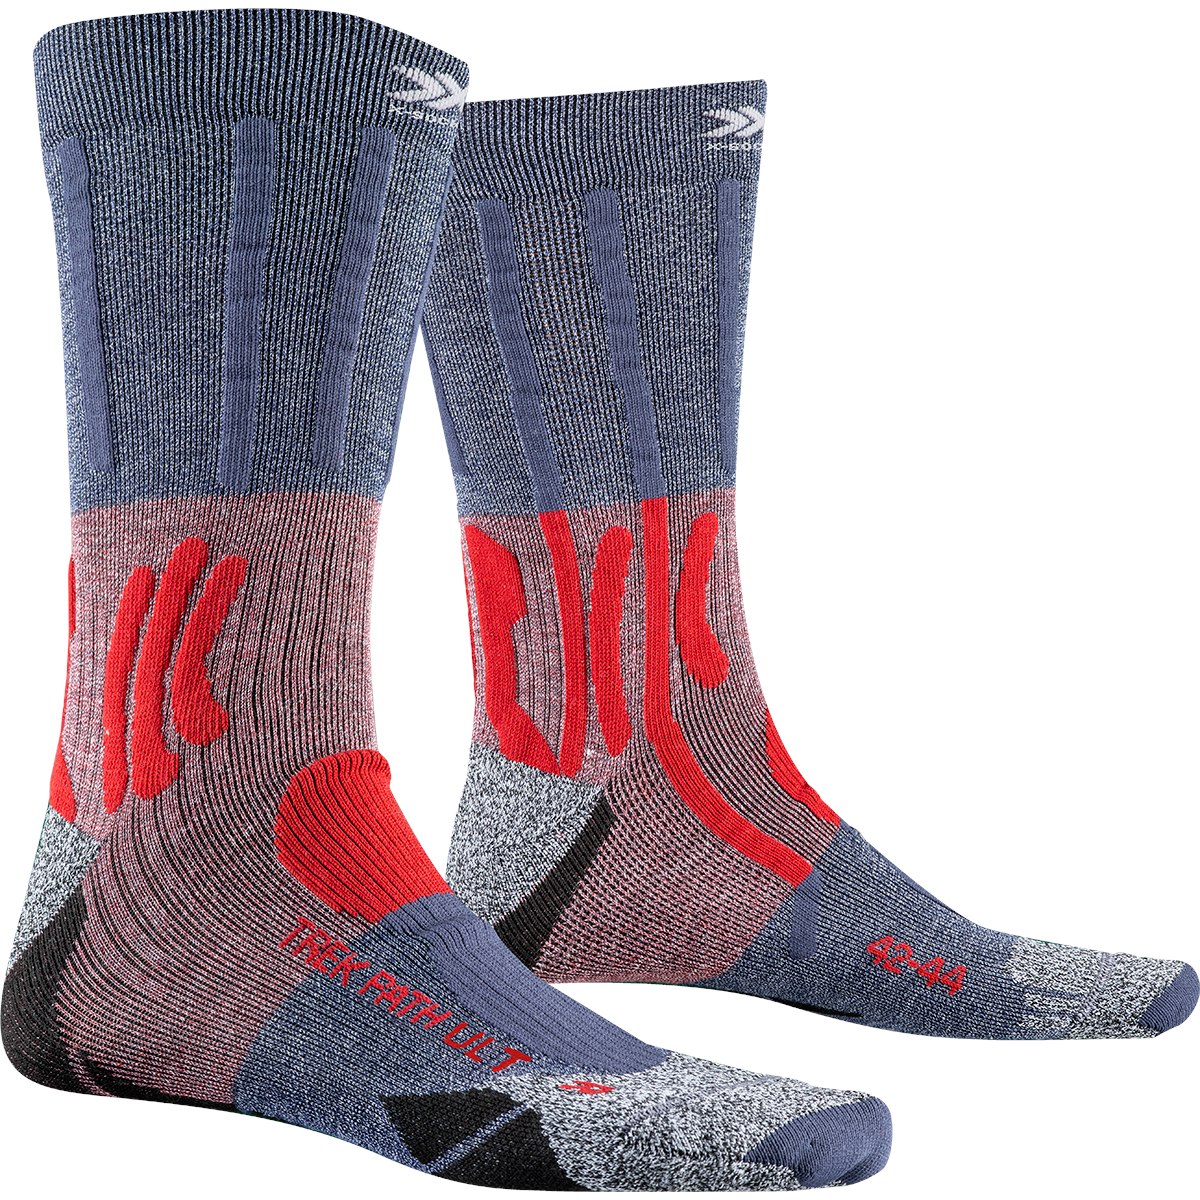 Produktbild von X-Socks Trek Path Ultra LT Socken - dolomite grey melange/namib red melange